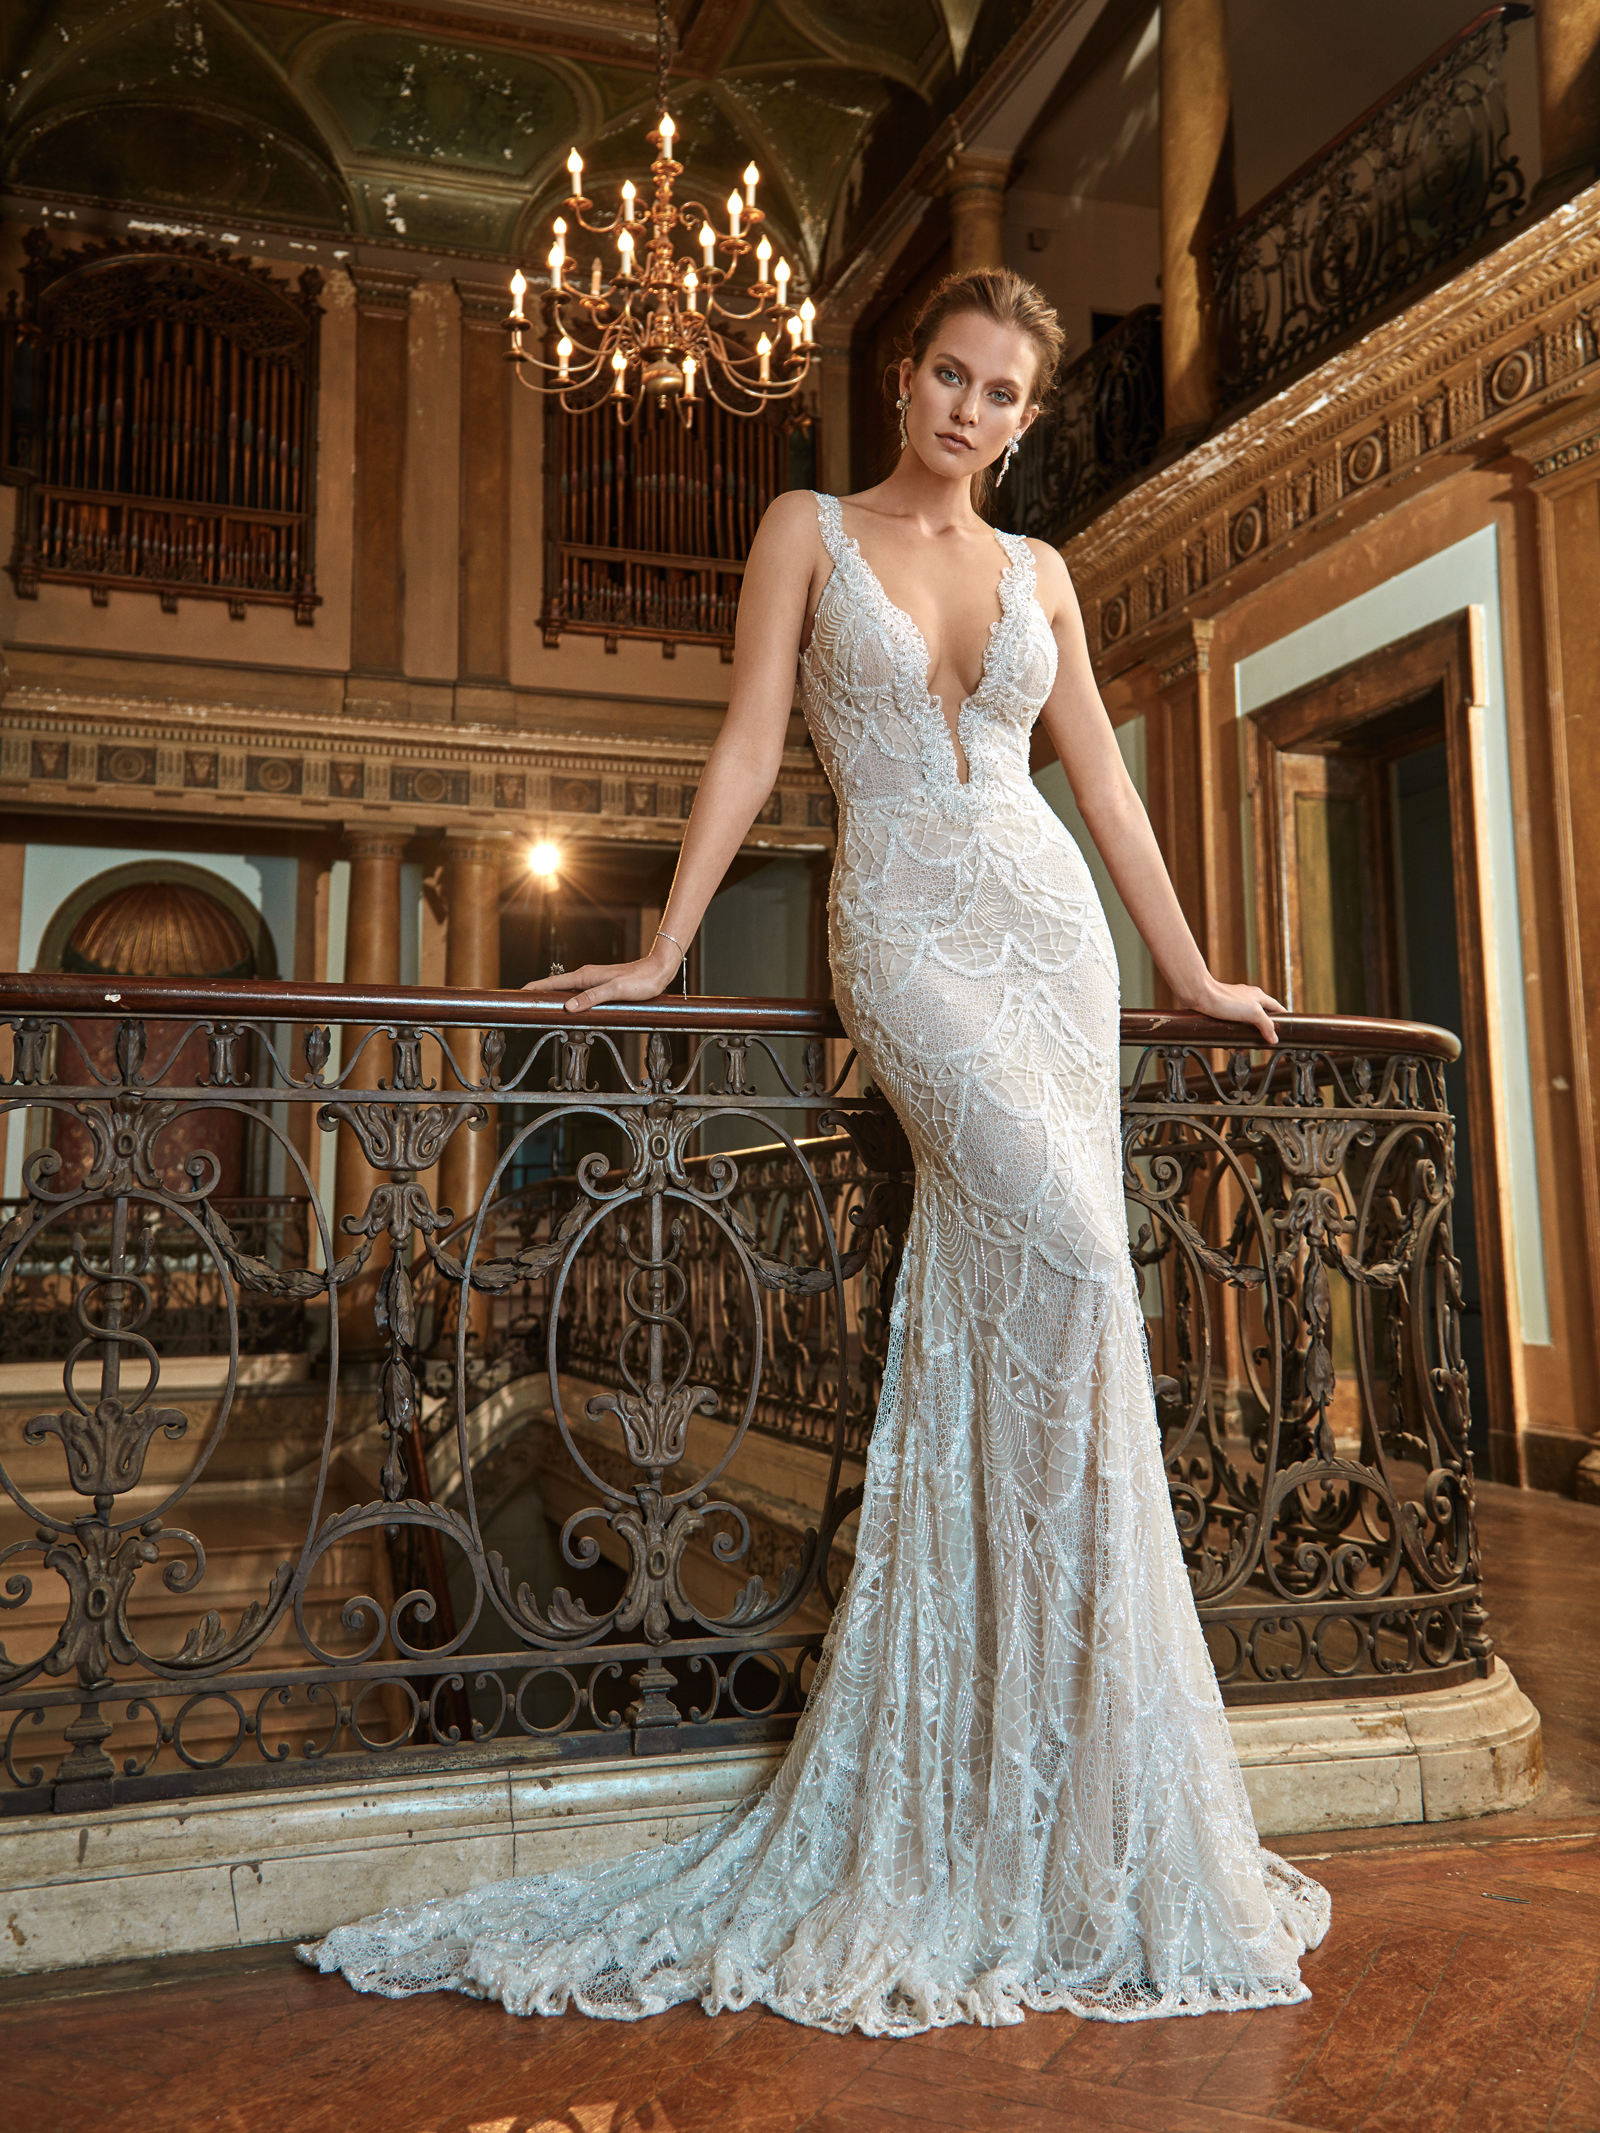  Galia Lahav Couture Wedding Dress 